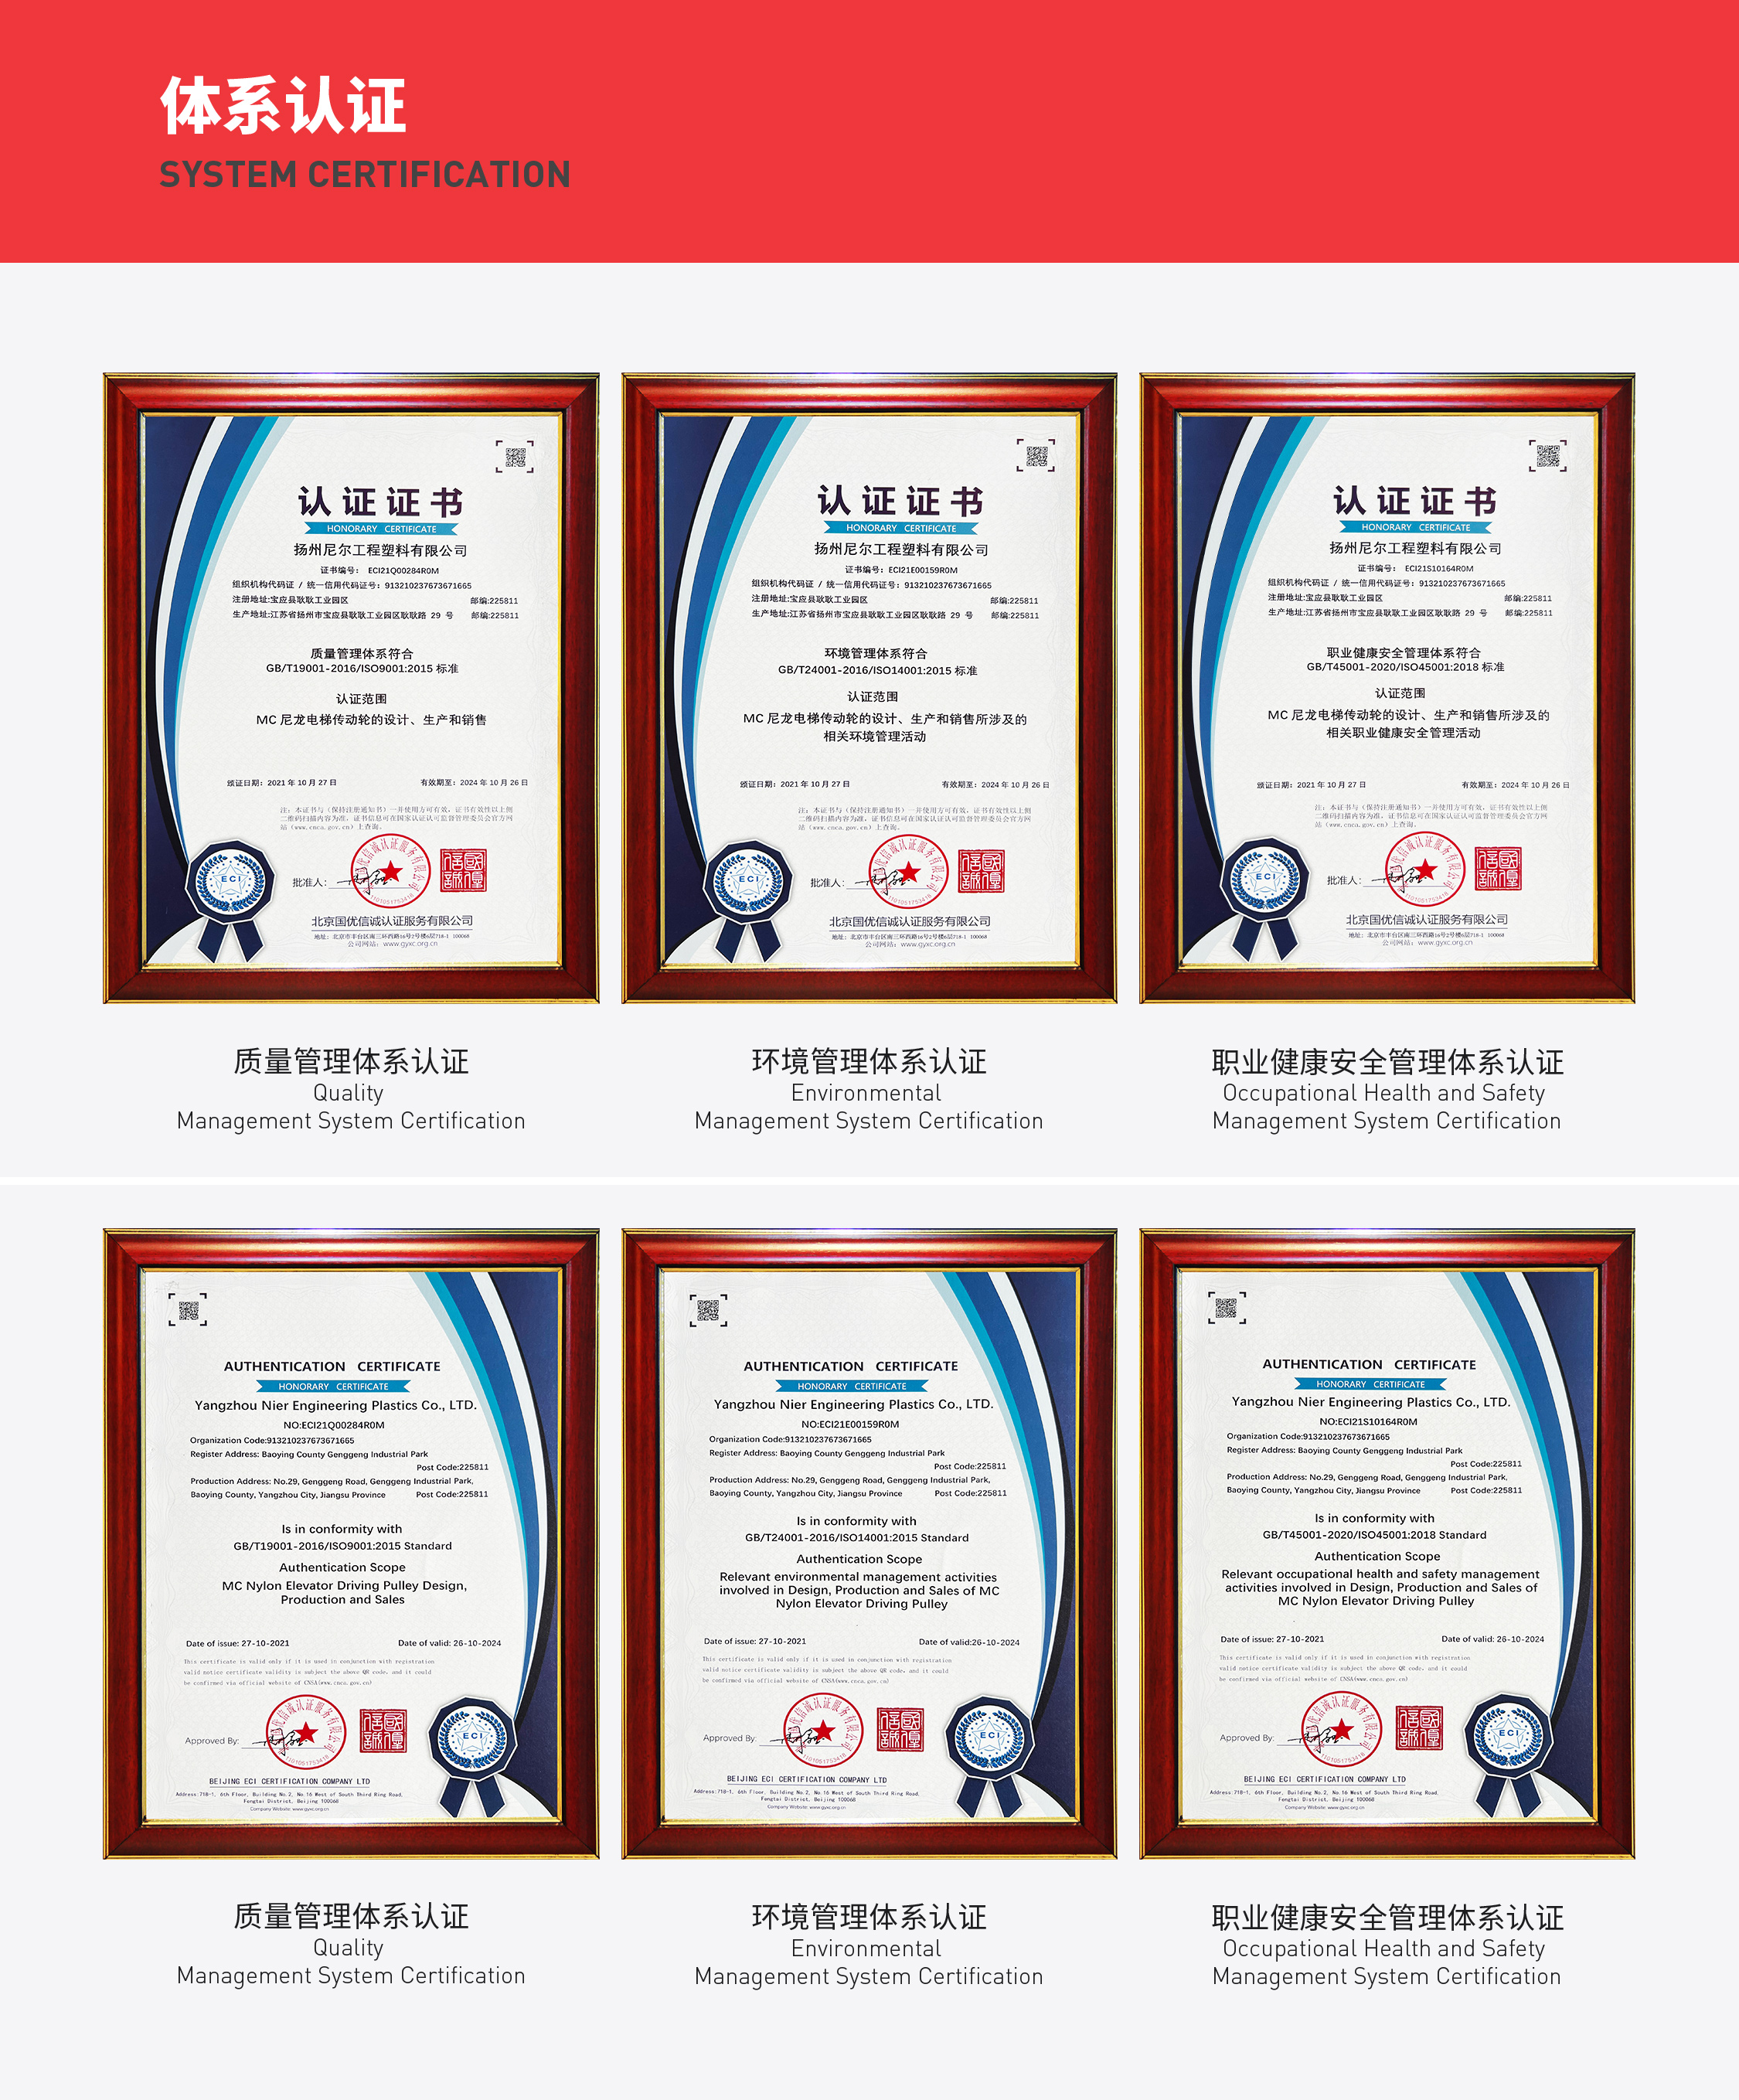 Three System Certification